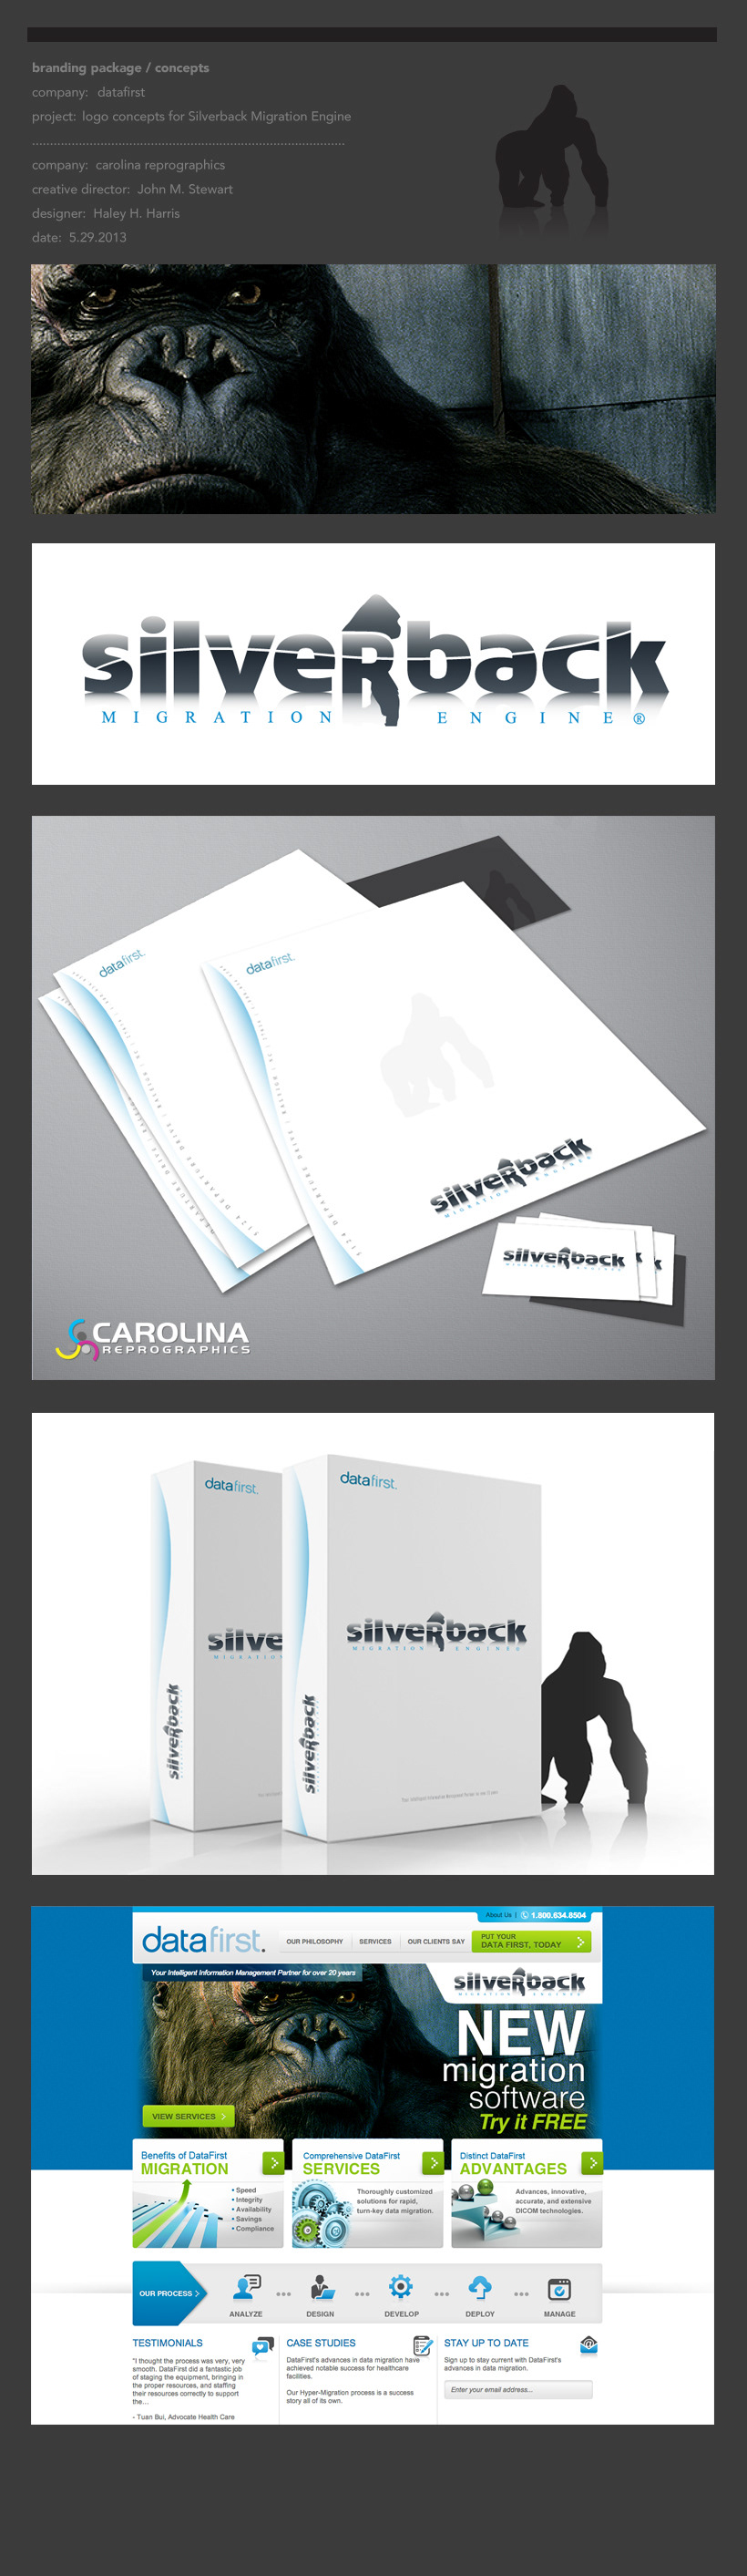 Software design logo gorilla Silverback engine mirgation corporate Technology information sharing Data first software packaging letterhead Web Web branding